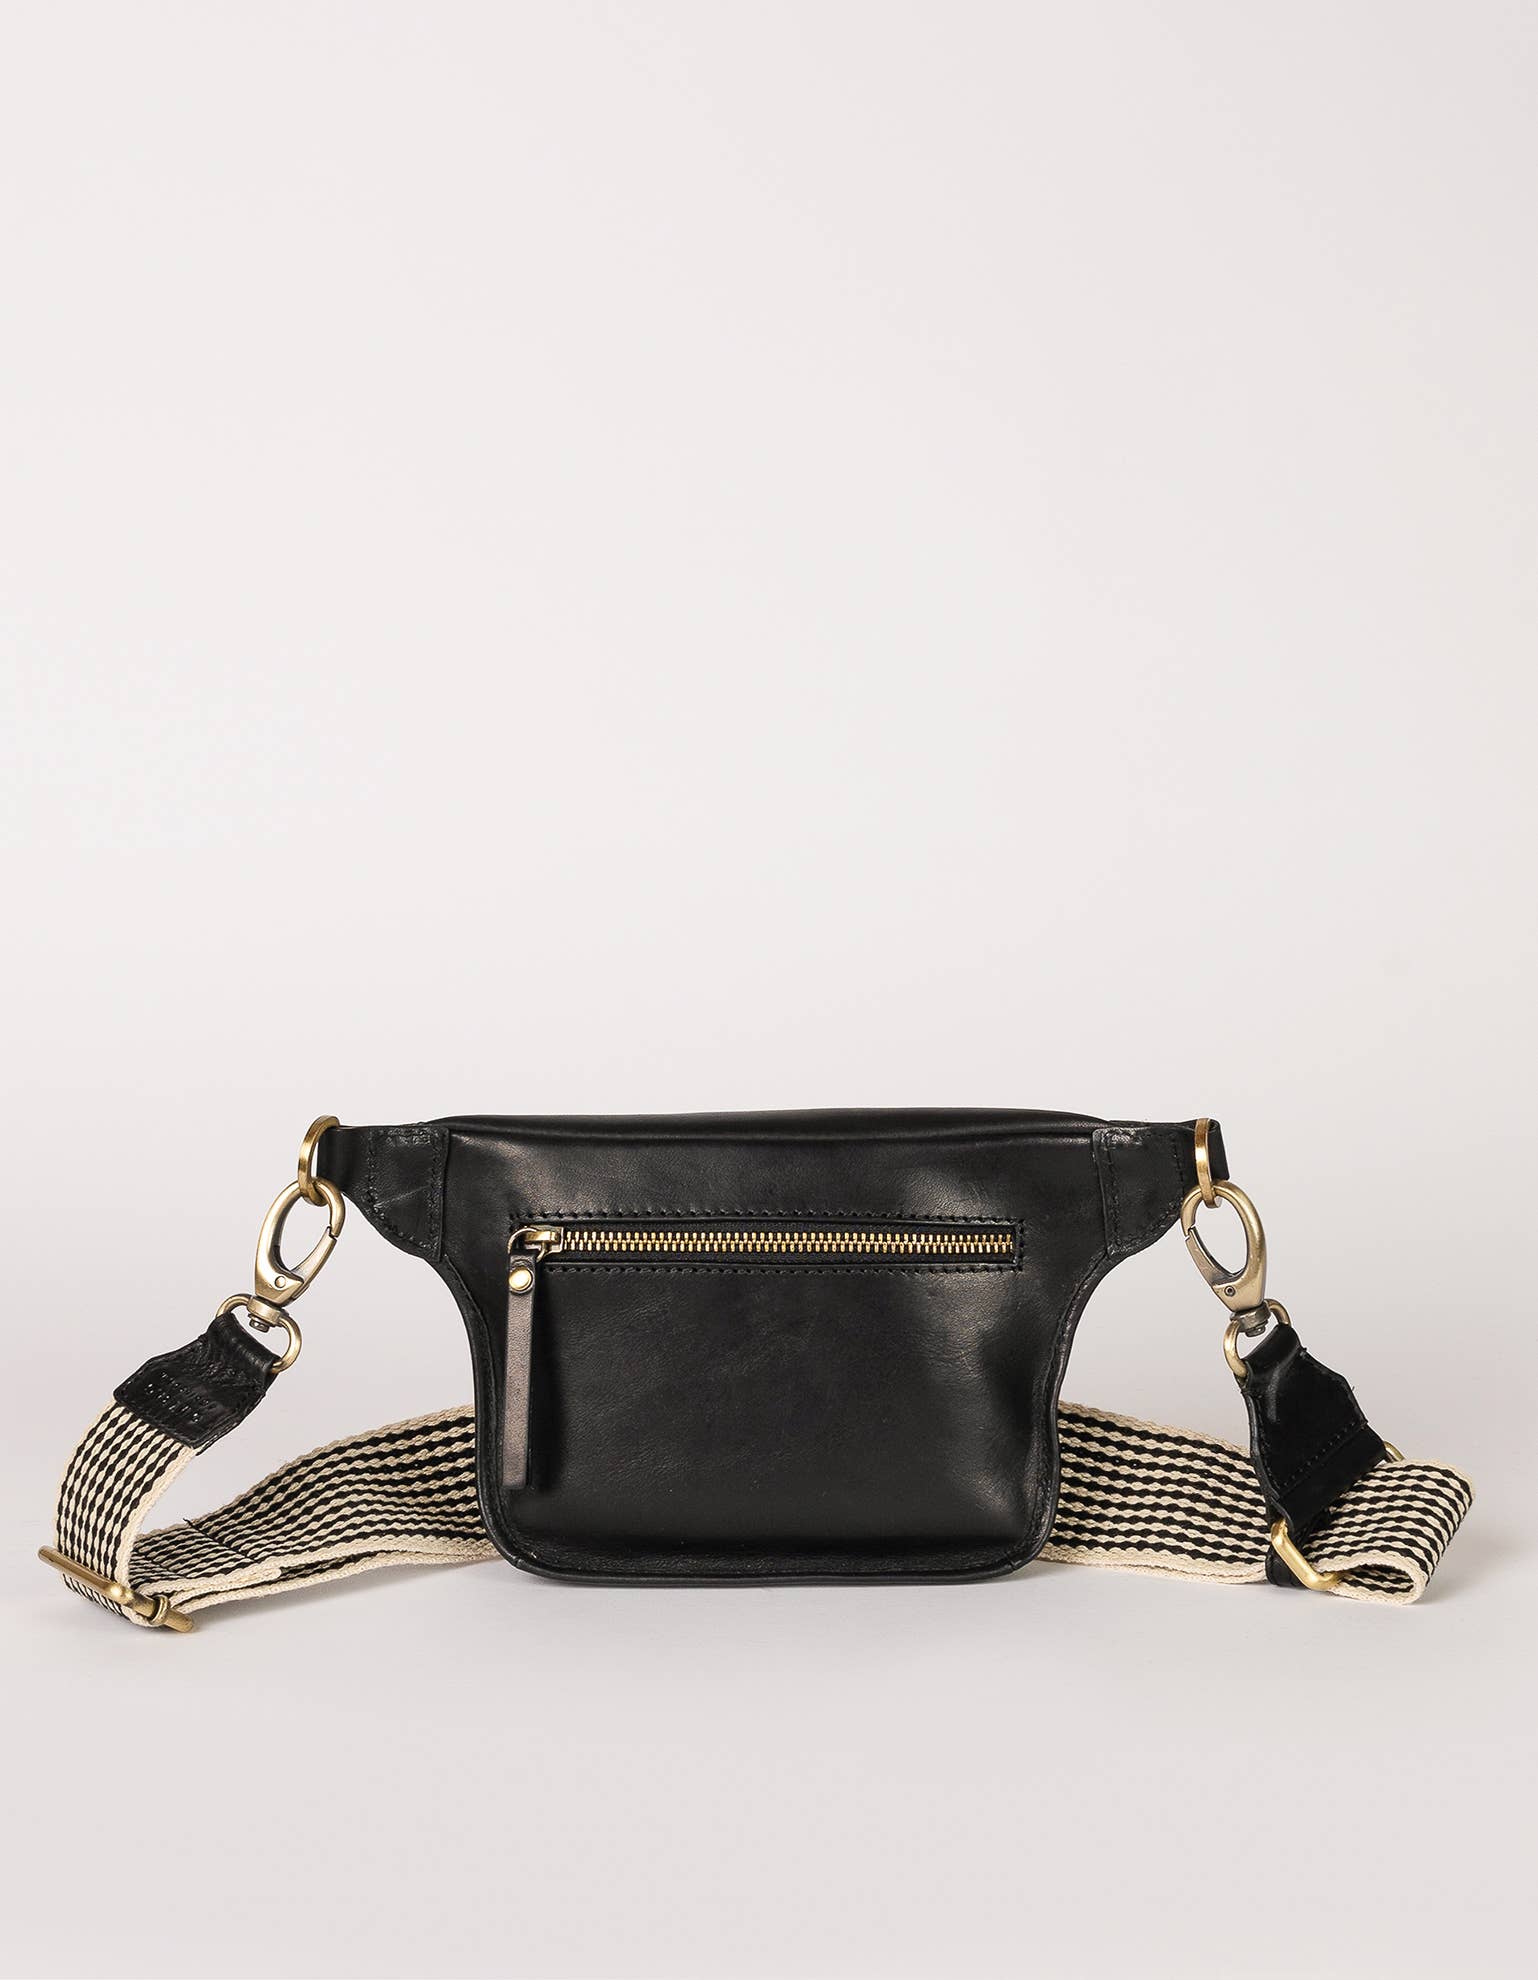 Banjara leather Flap Bag with banjara belt